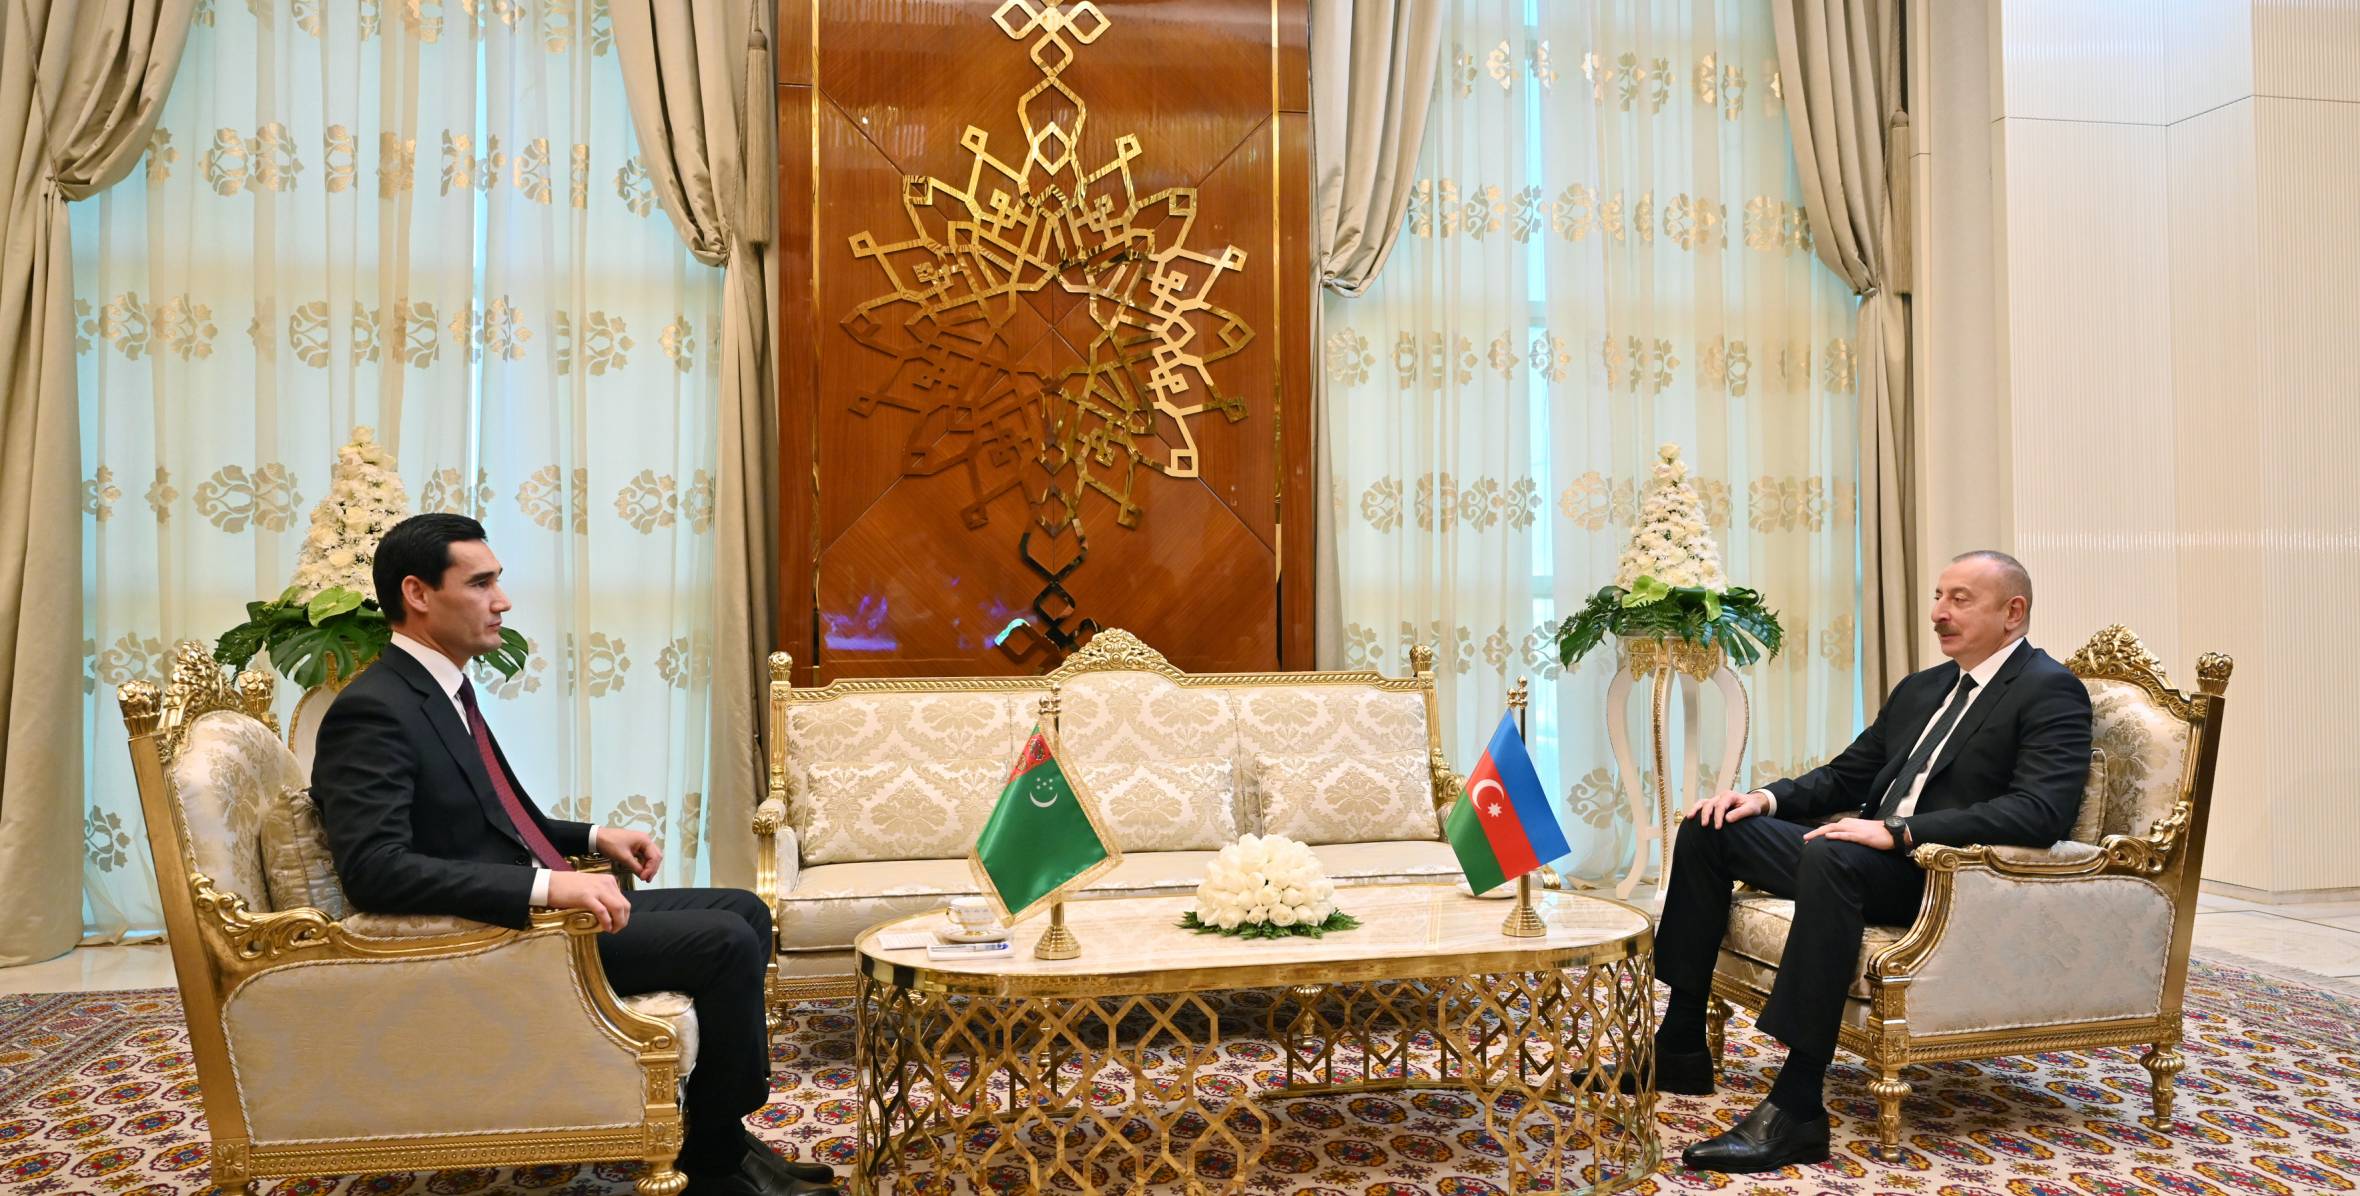 Ilham Aliyev met with President of Turkmenistan Serdar Berdimuhamedov in the city